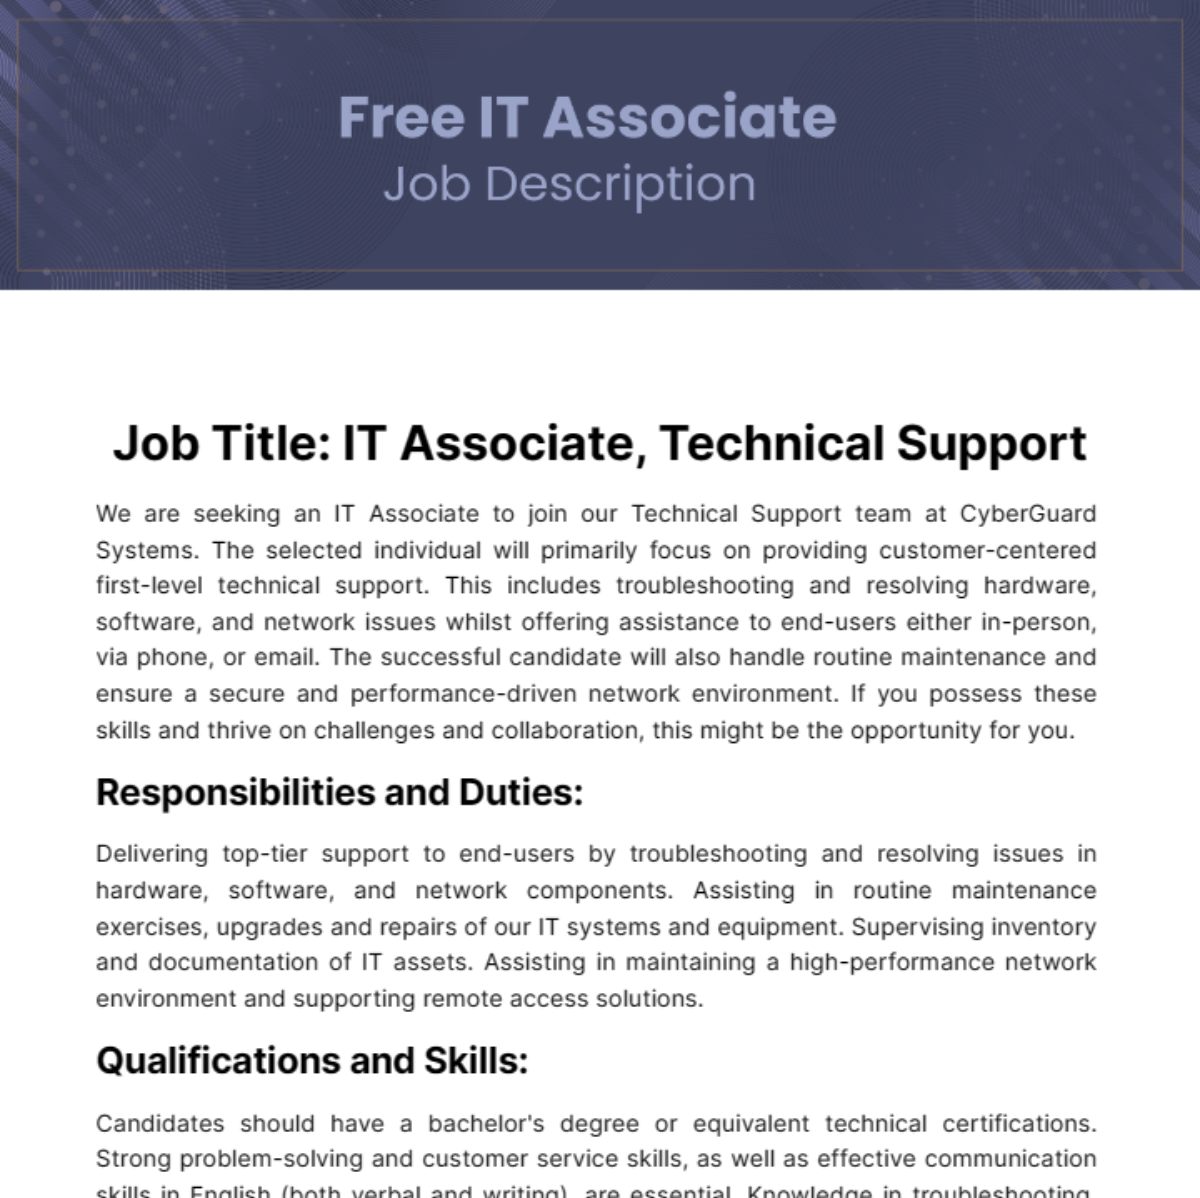 Free IT Associate Job Description Template